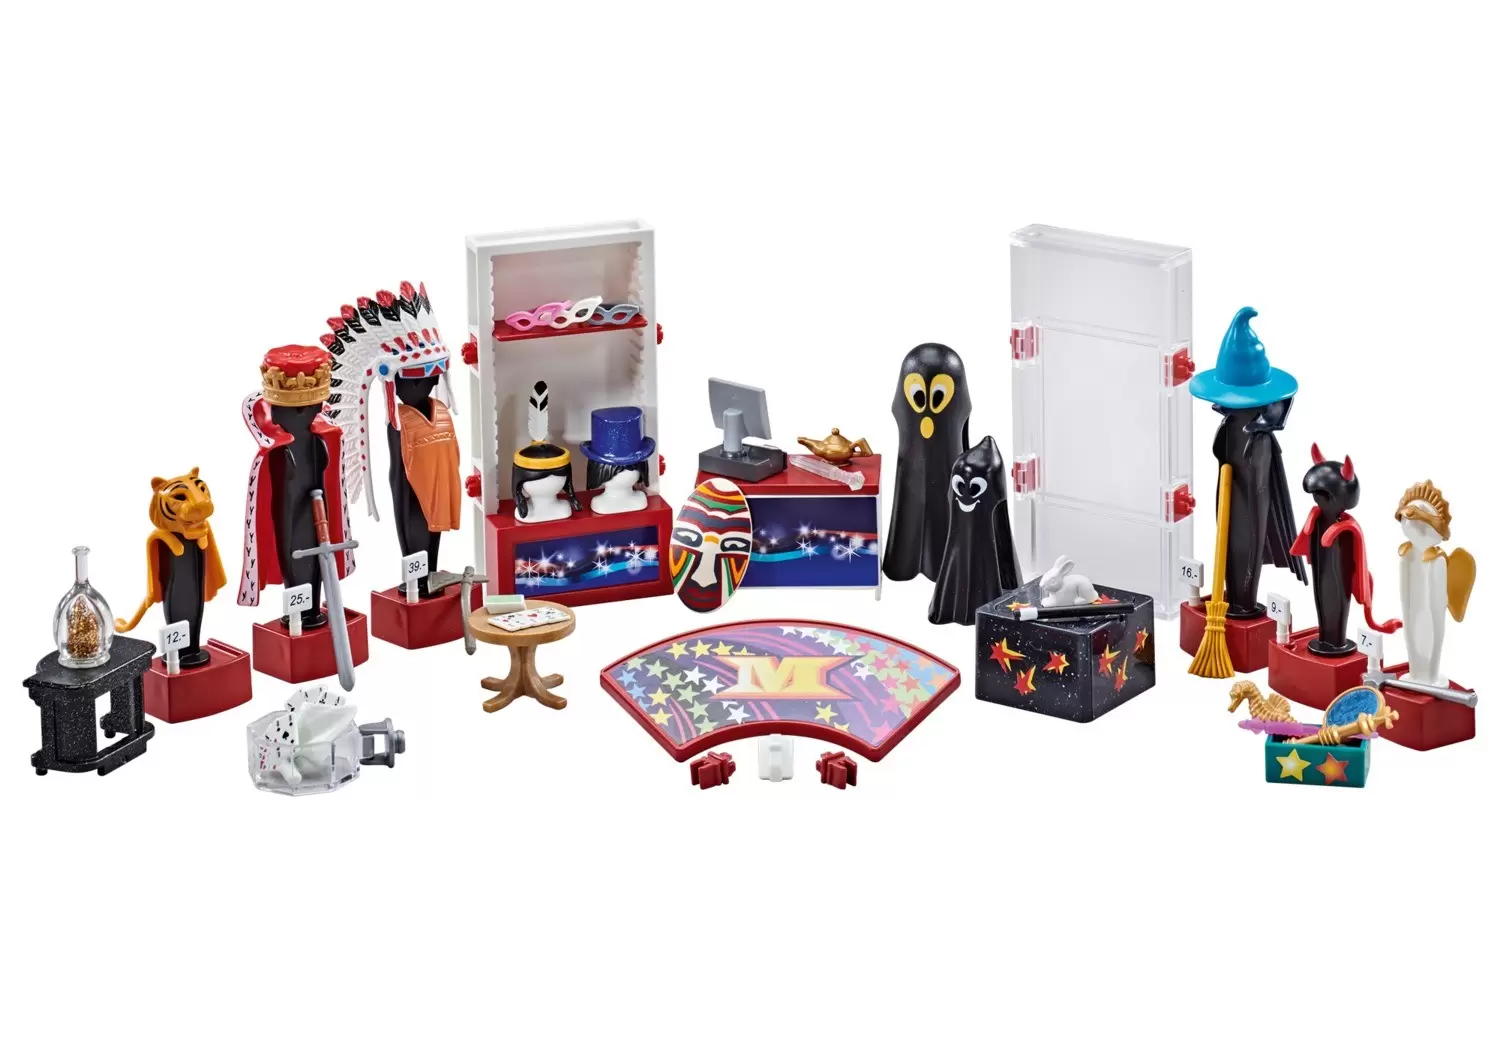 Playmobil Accessories & decorations - Costume Shop